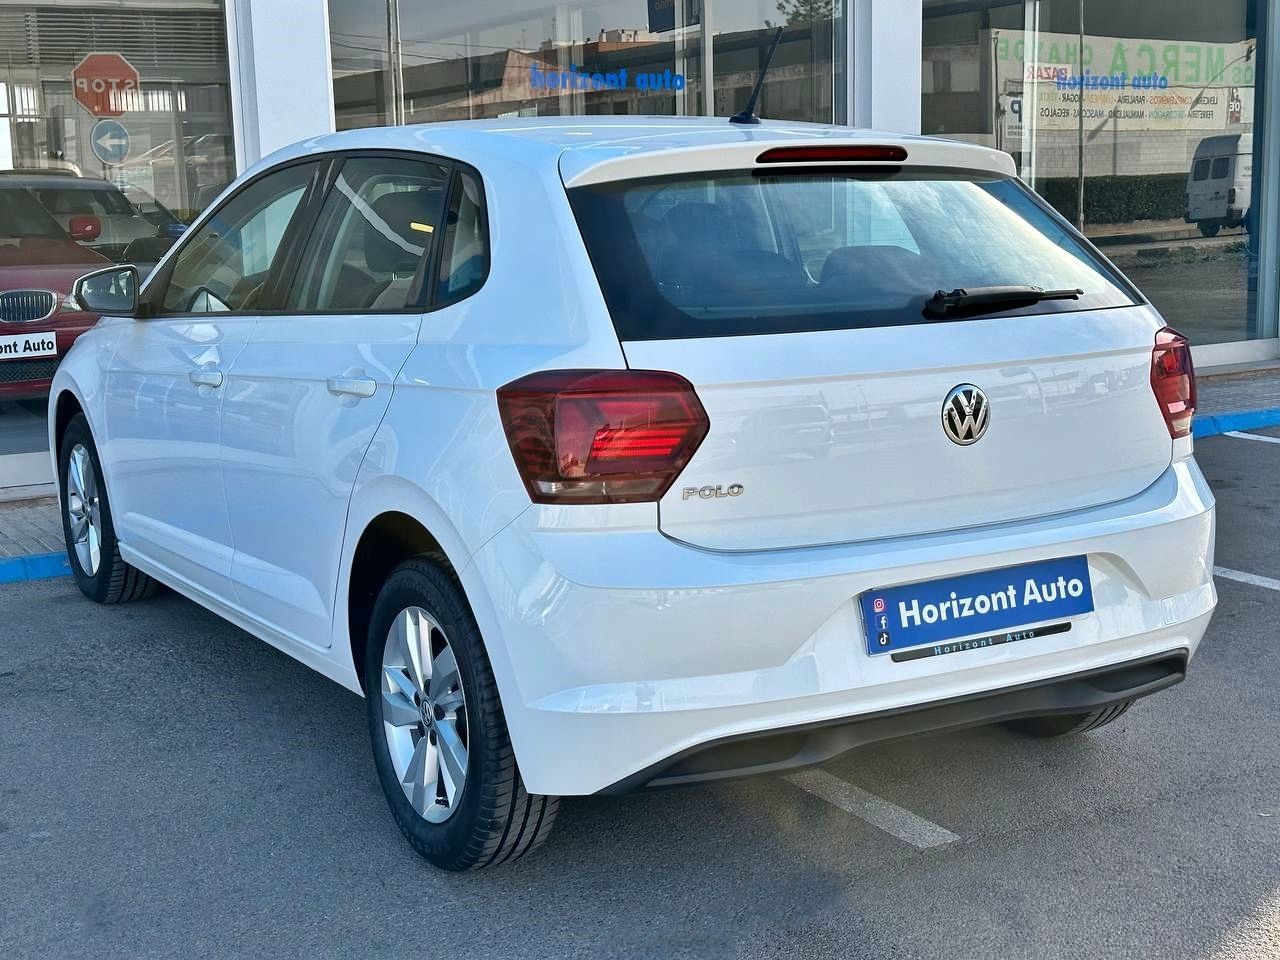 Foto Volkswagen Polo 12